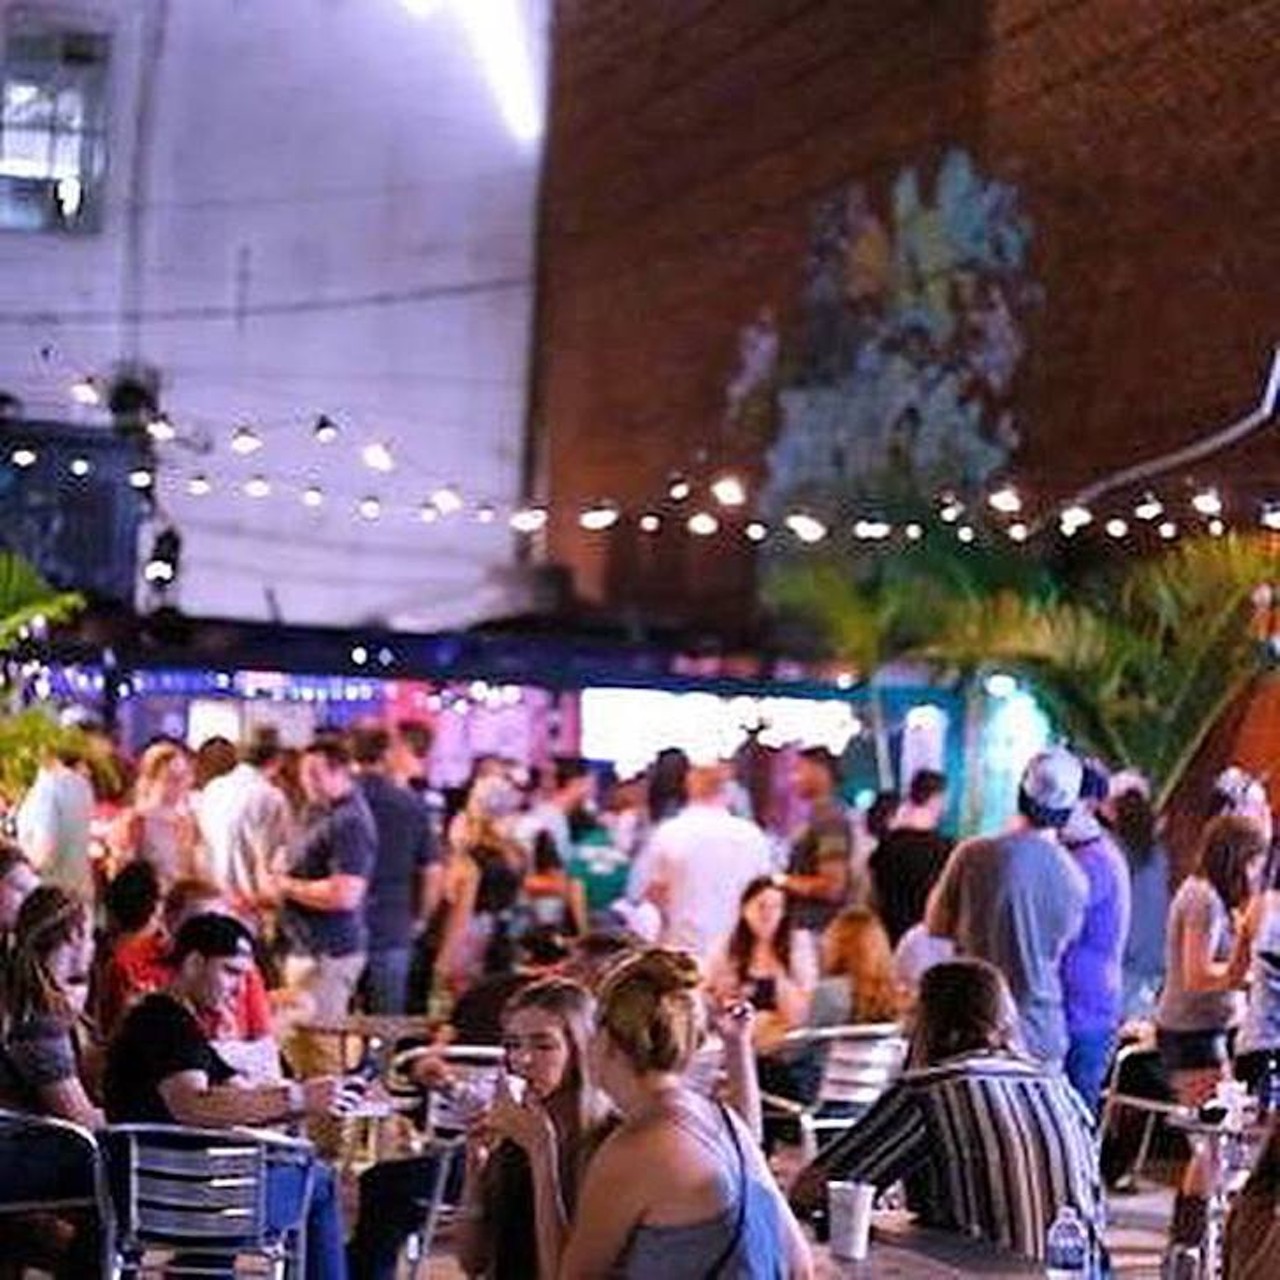 Crowbar  
1812 N. 17th St., Ybor City, 813-241-8600
Crowbar is Ybor's edgy downtown nightclub & beer garden patio that features live music, DJs & weekly special events.
Photo via Crowbar/Facebook